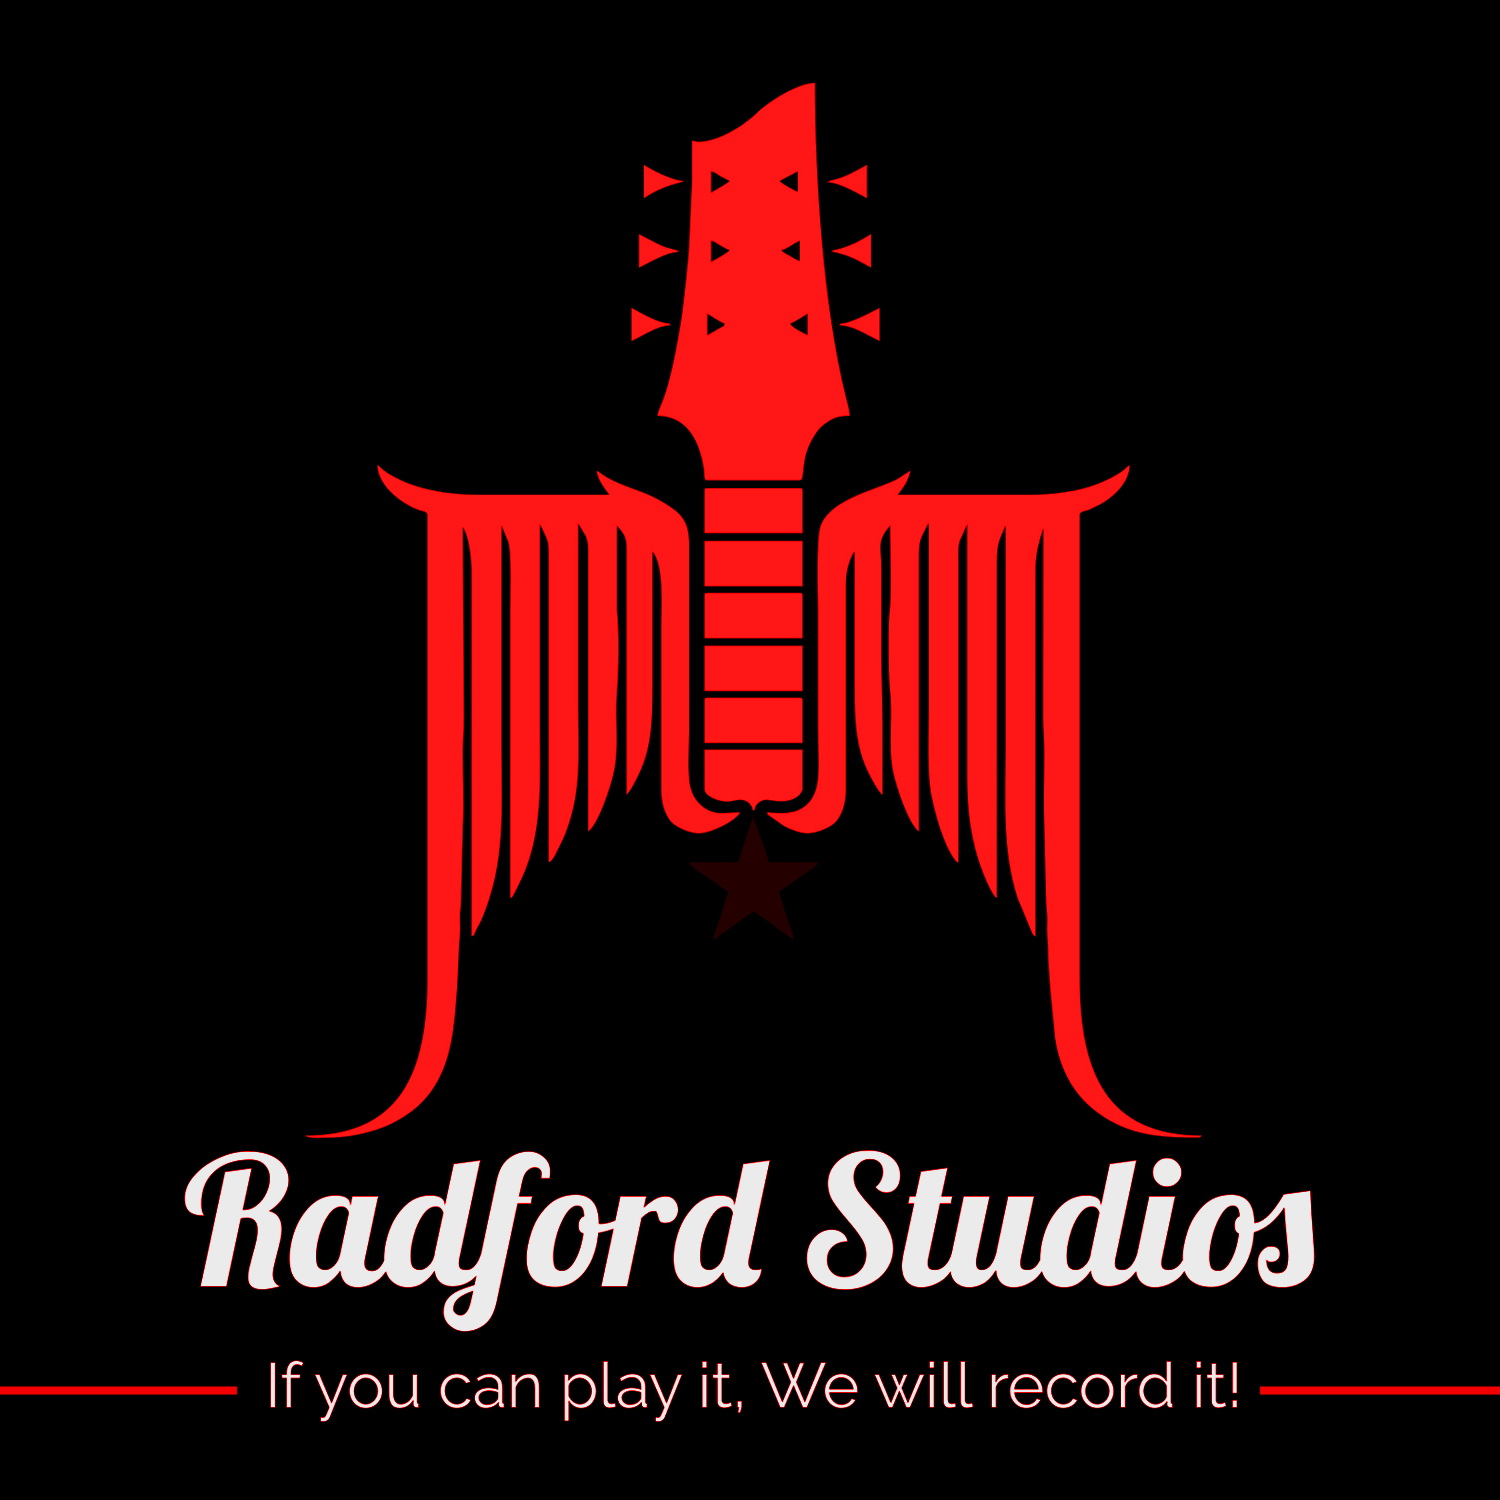 Radford Studios